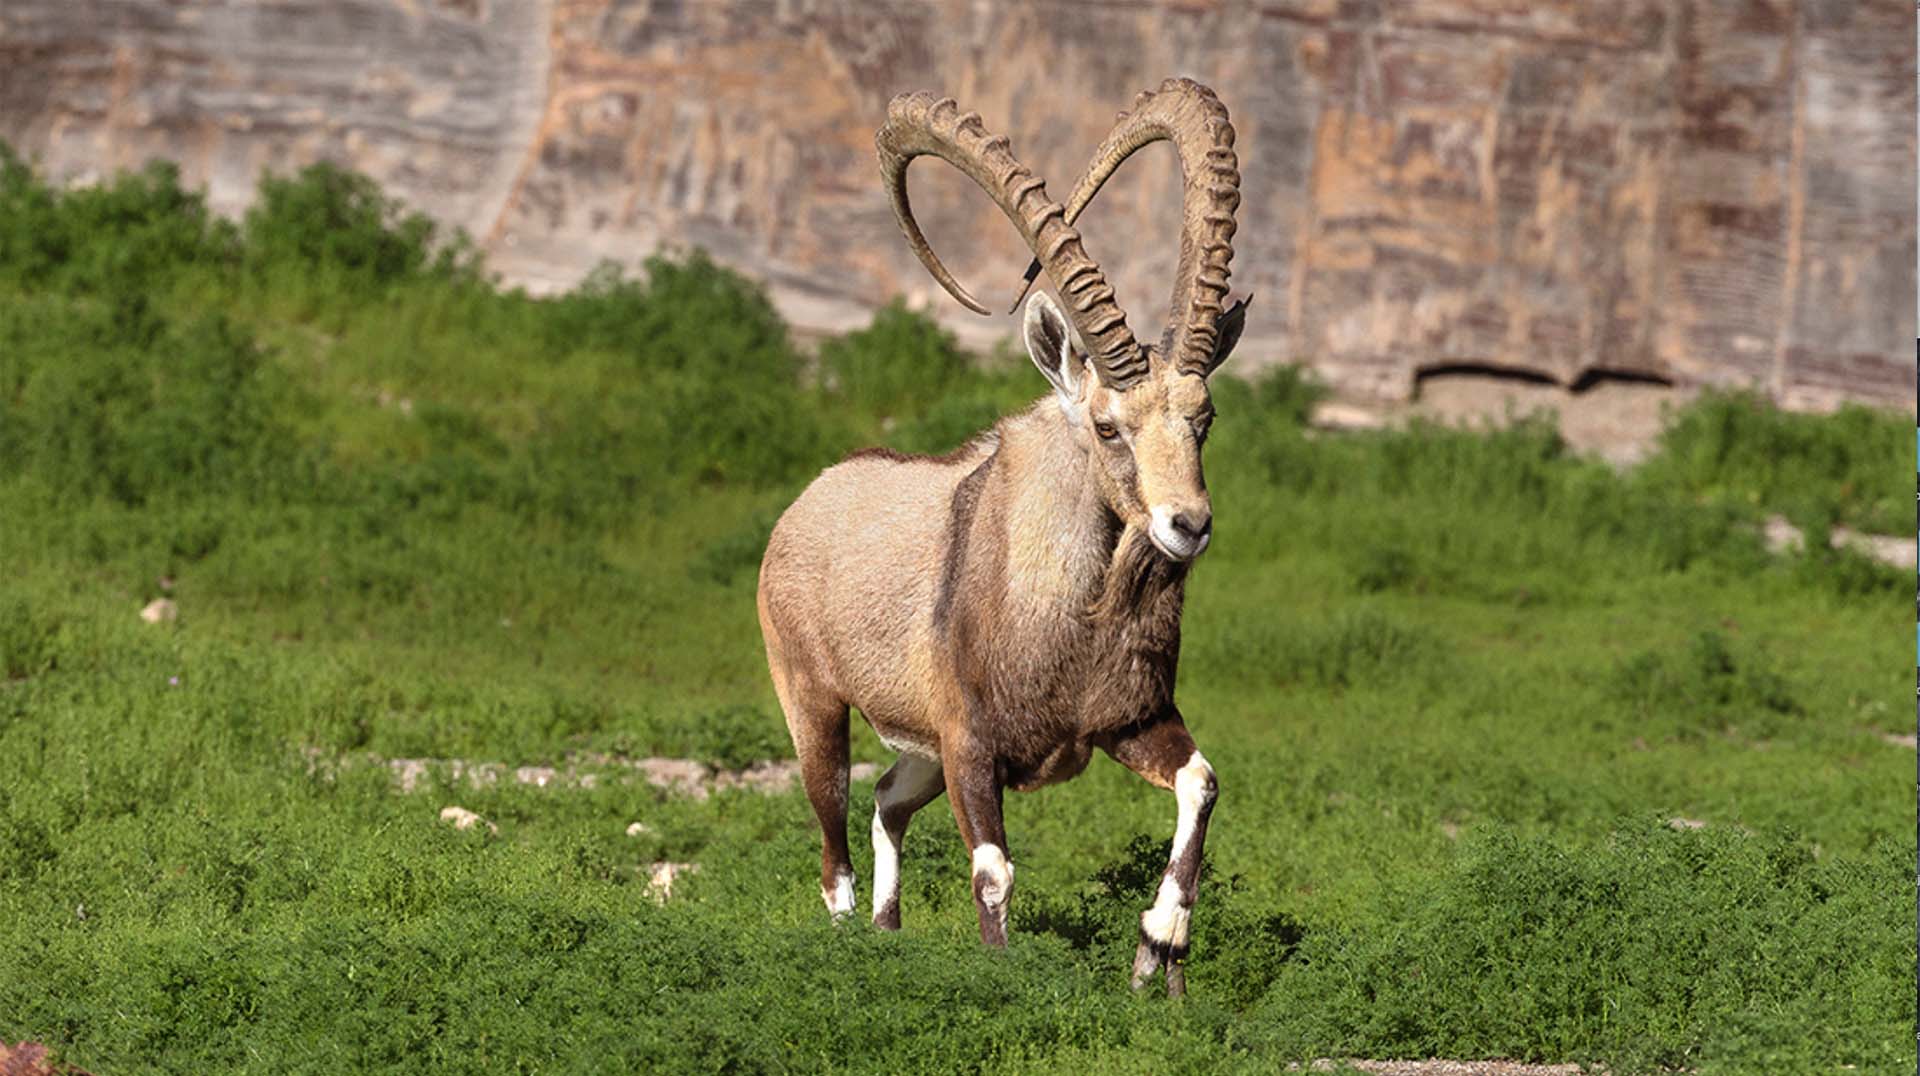 Nubian Ibex | San Diego Zoo Animals & Plants